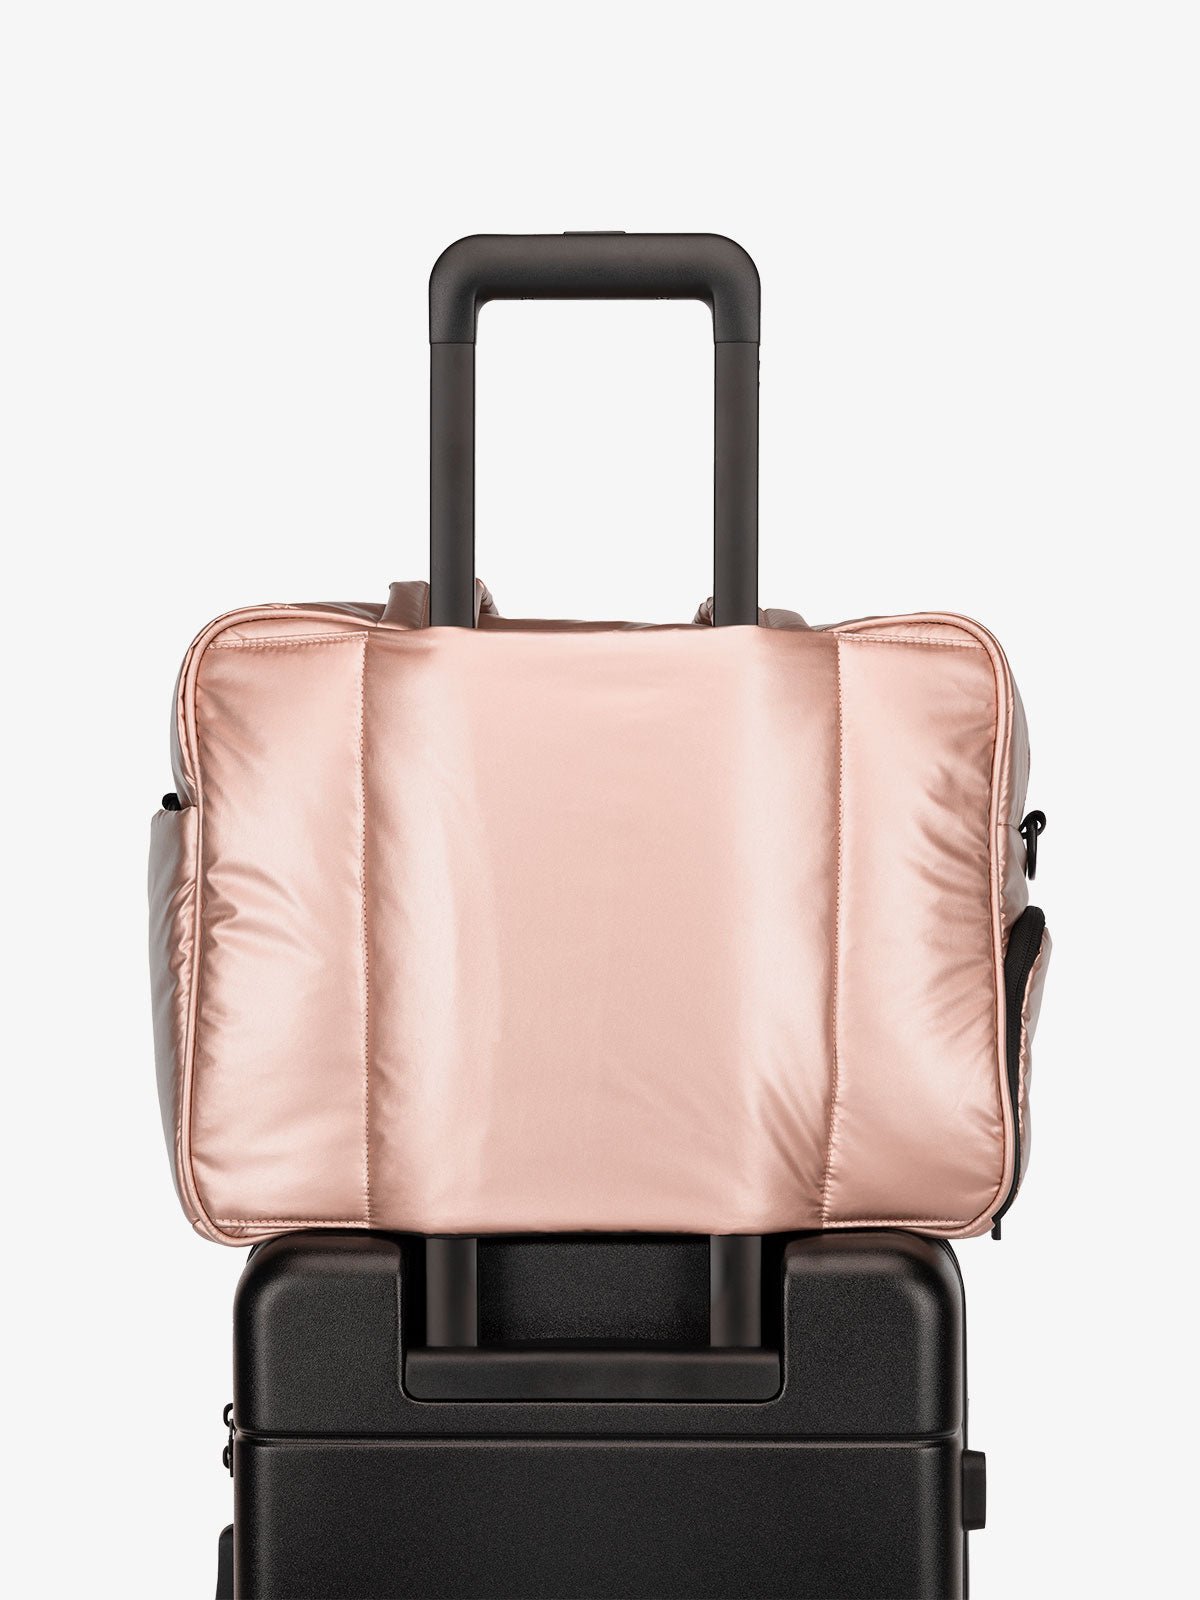 CALPAK Luka Duffel bag with luggage trolley sleeve in metallic pink rose gold